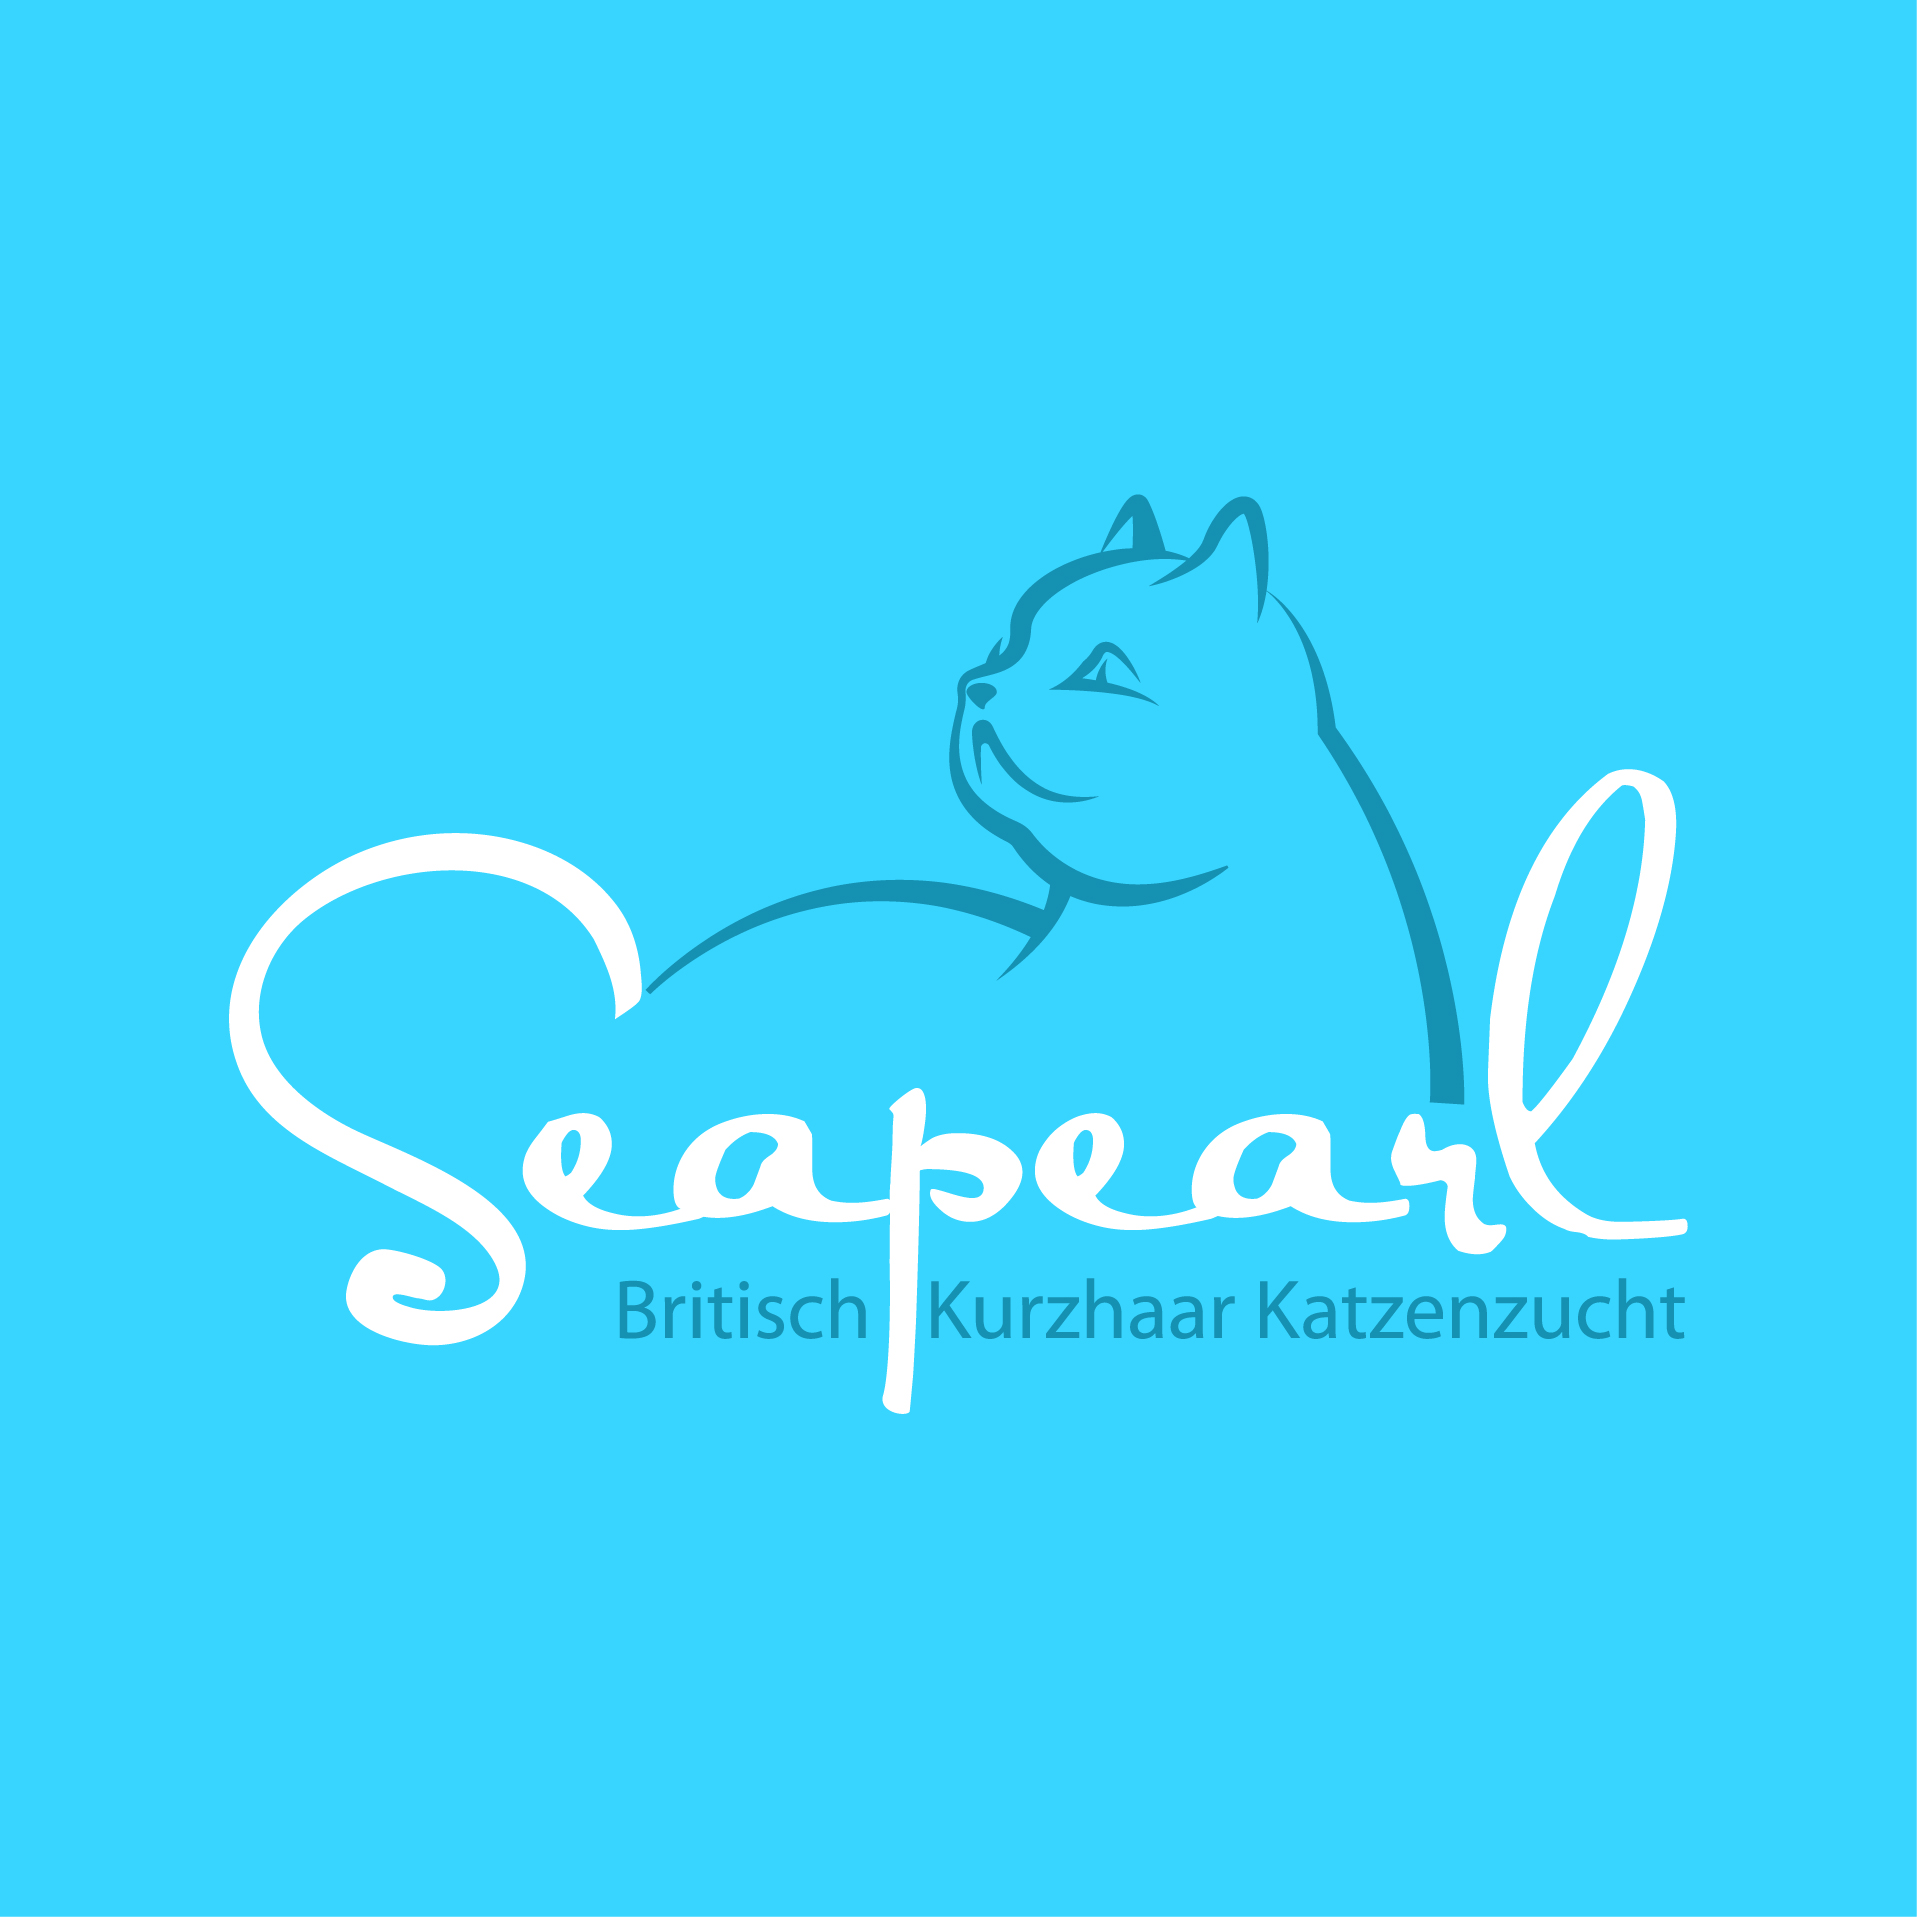 Seapearl Logo